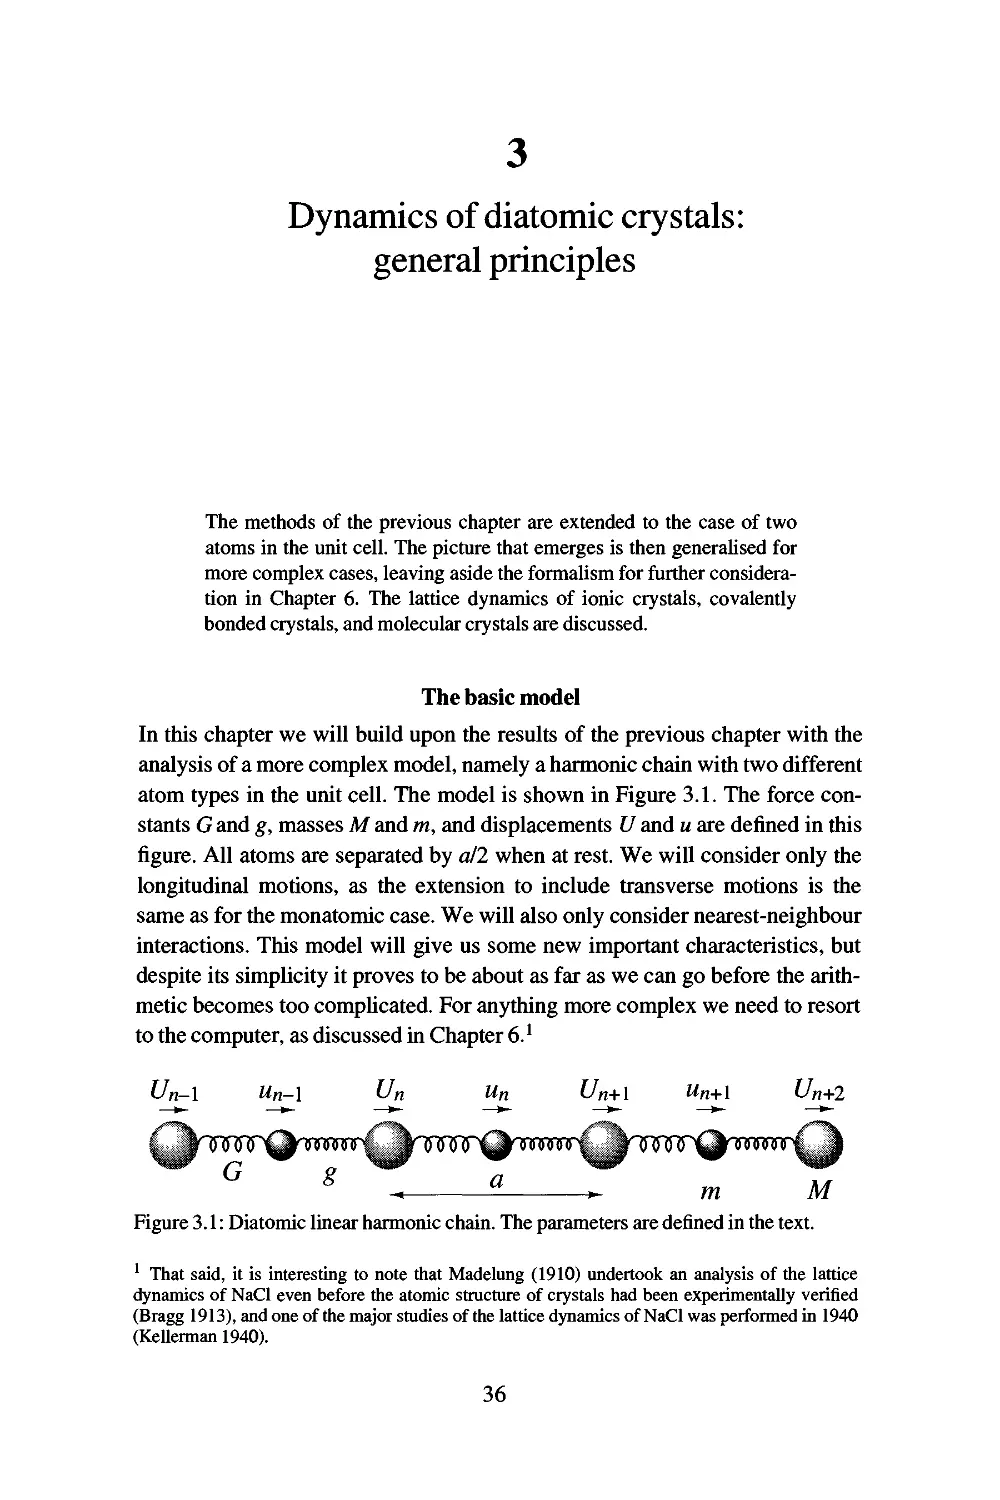 Dynamics of diatomic crystals: general principles